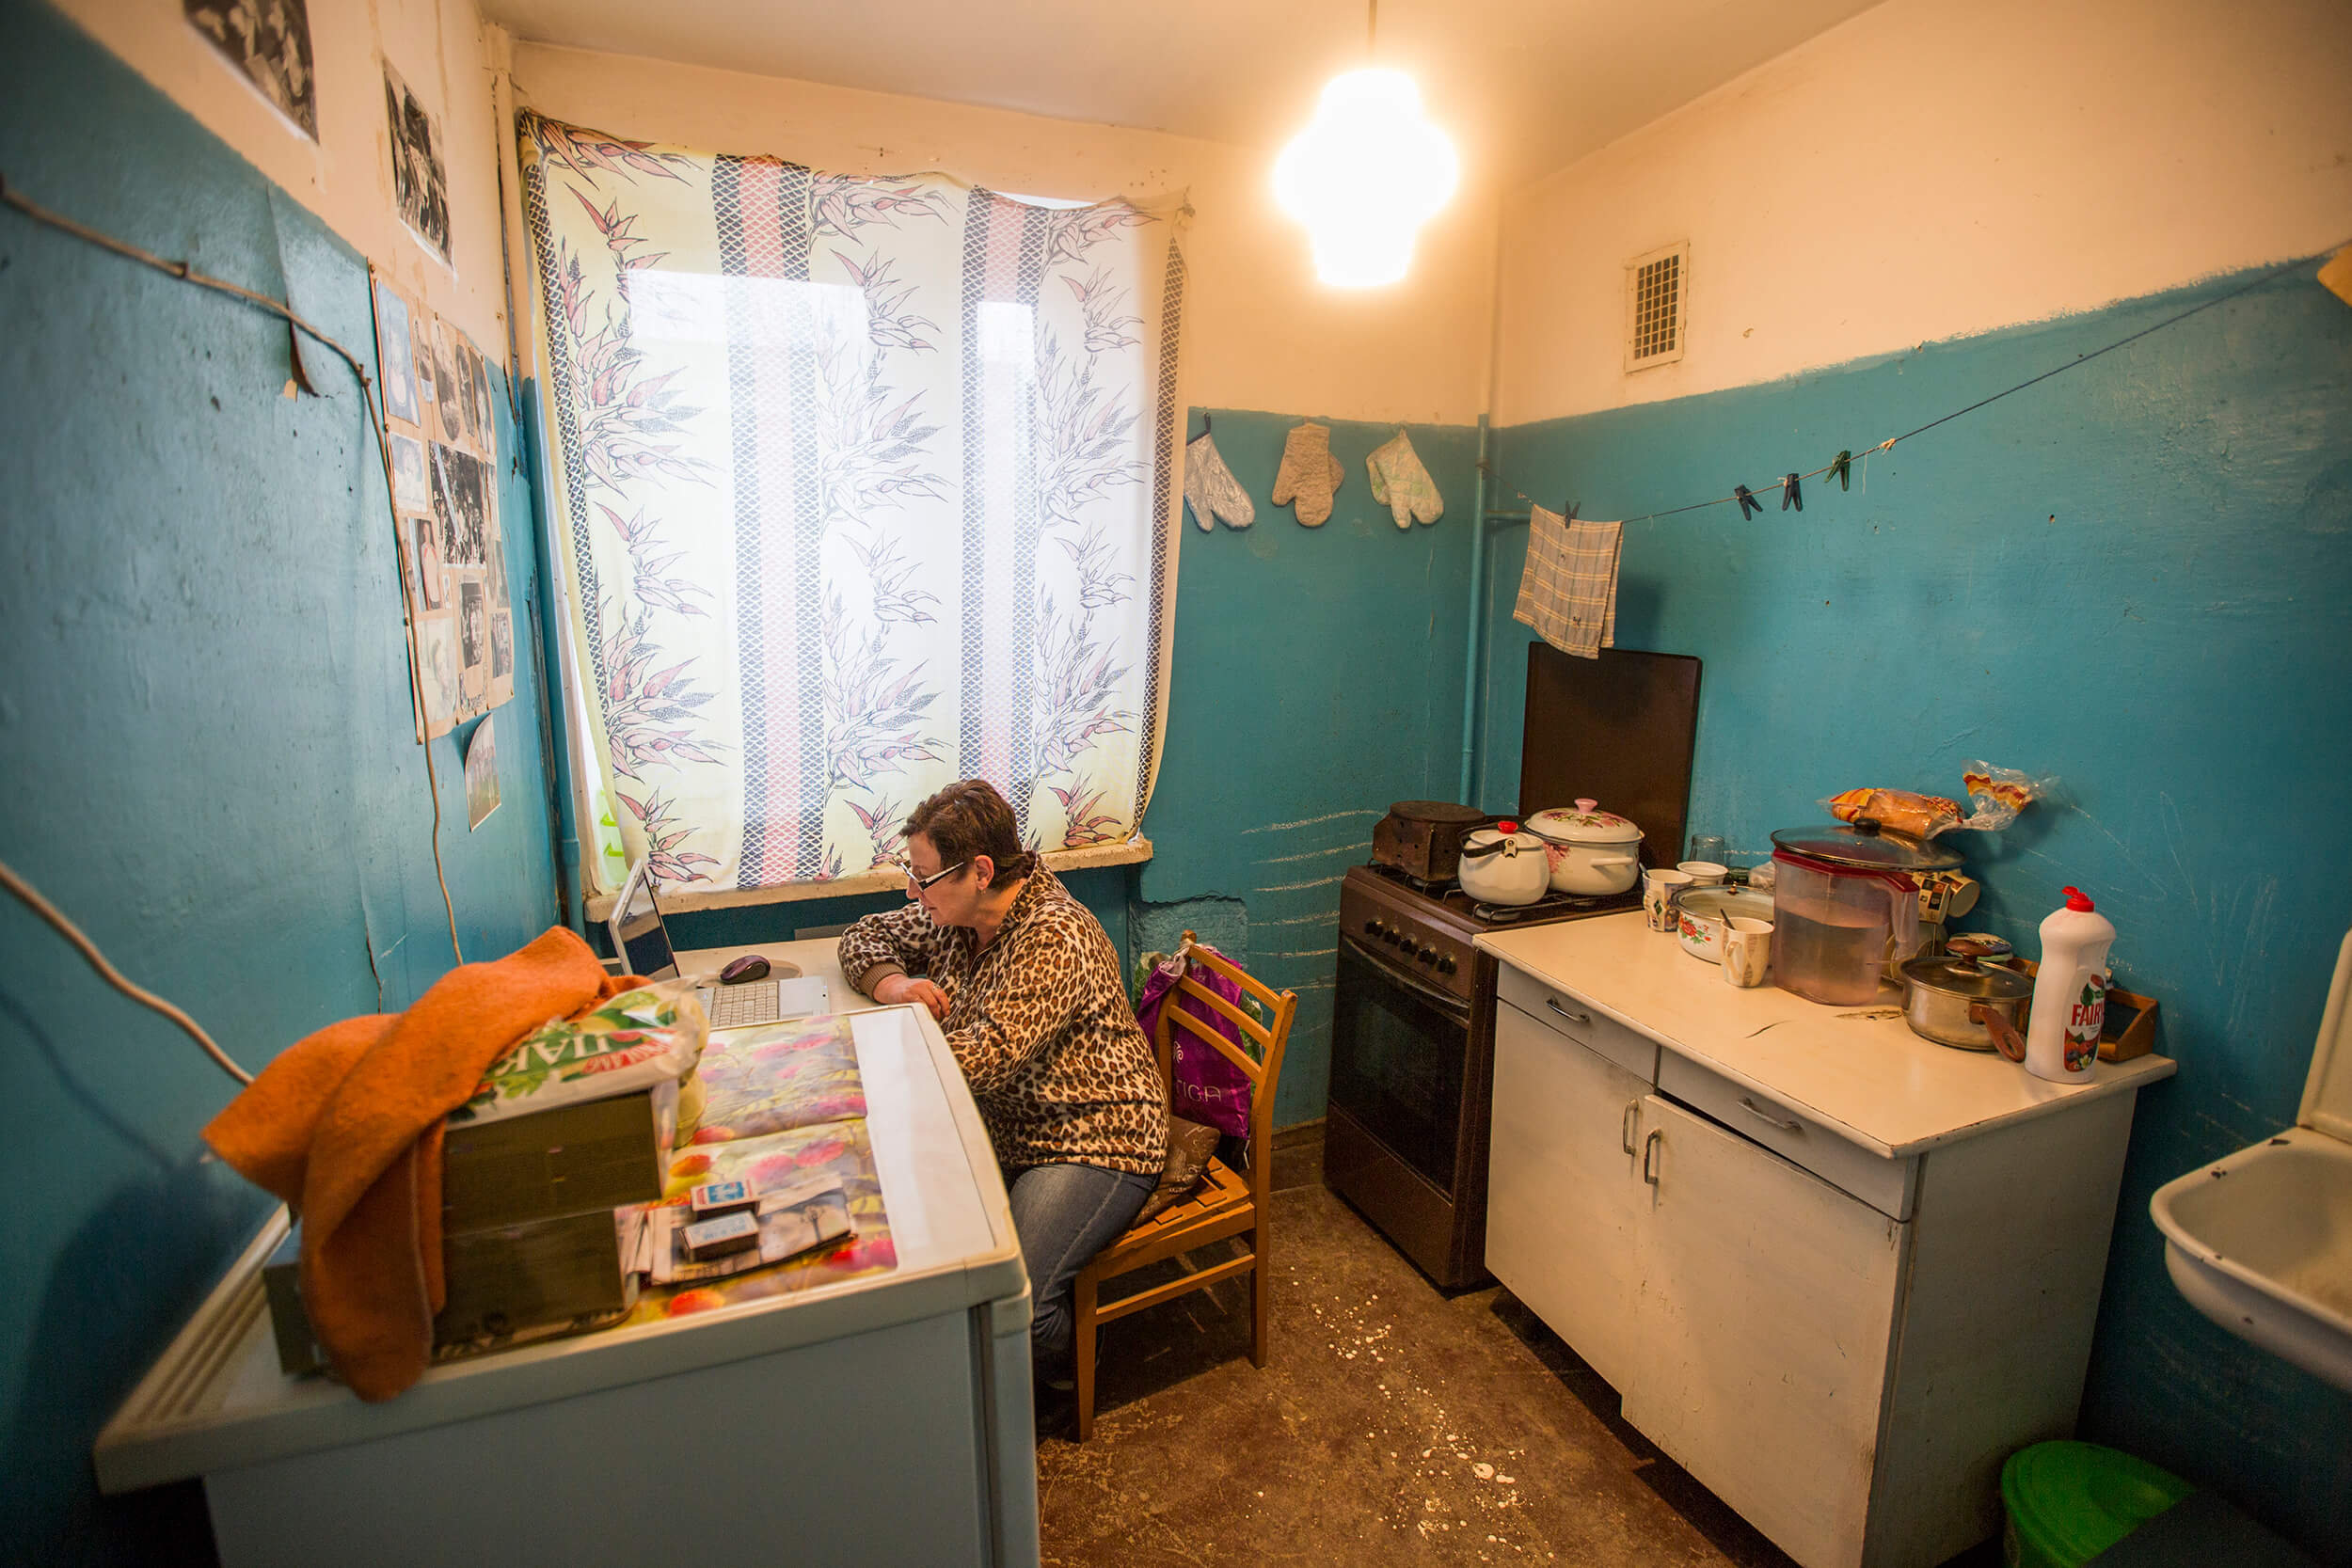  Raisa in her home in Simferopol. 